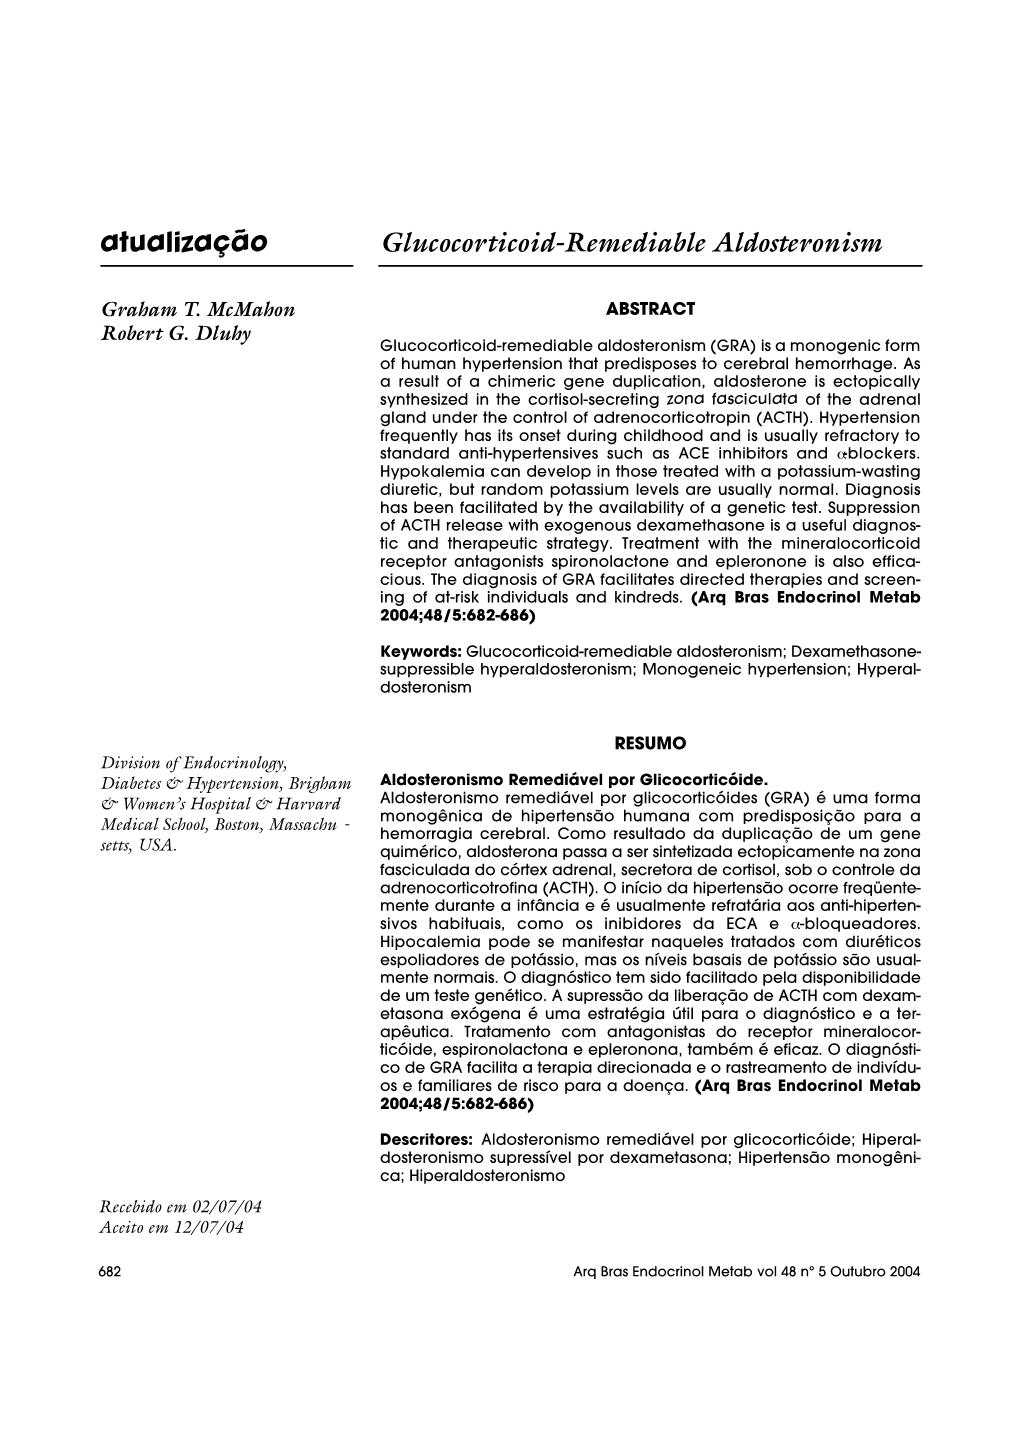 Atualização Glucocorticoid-Remediable Aldosteronism